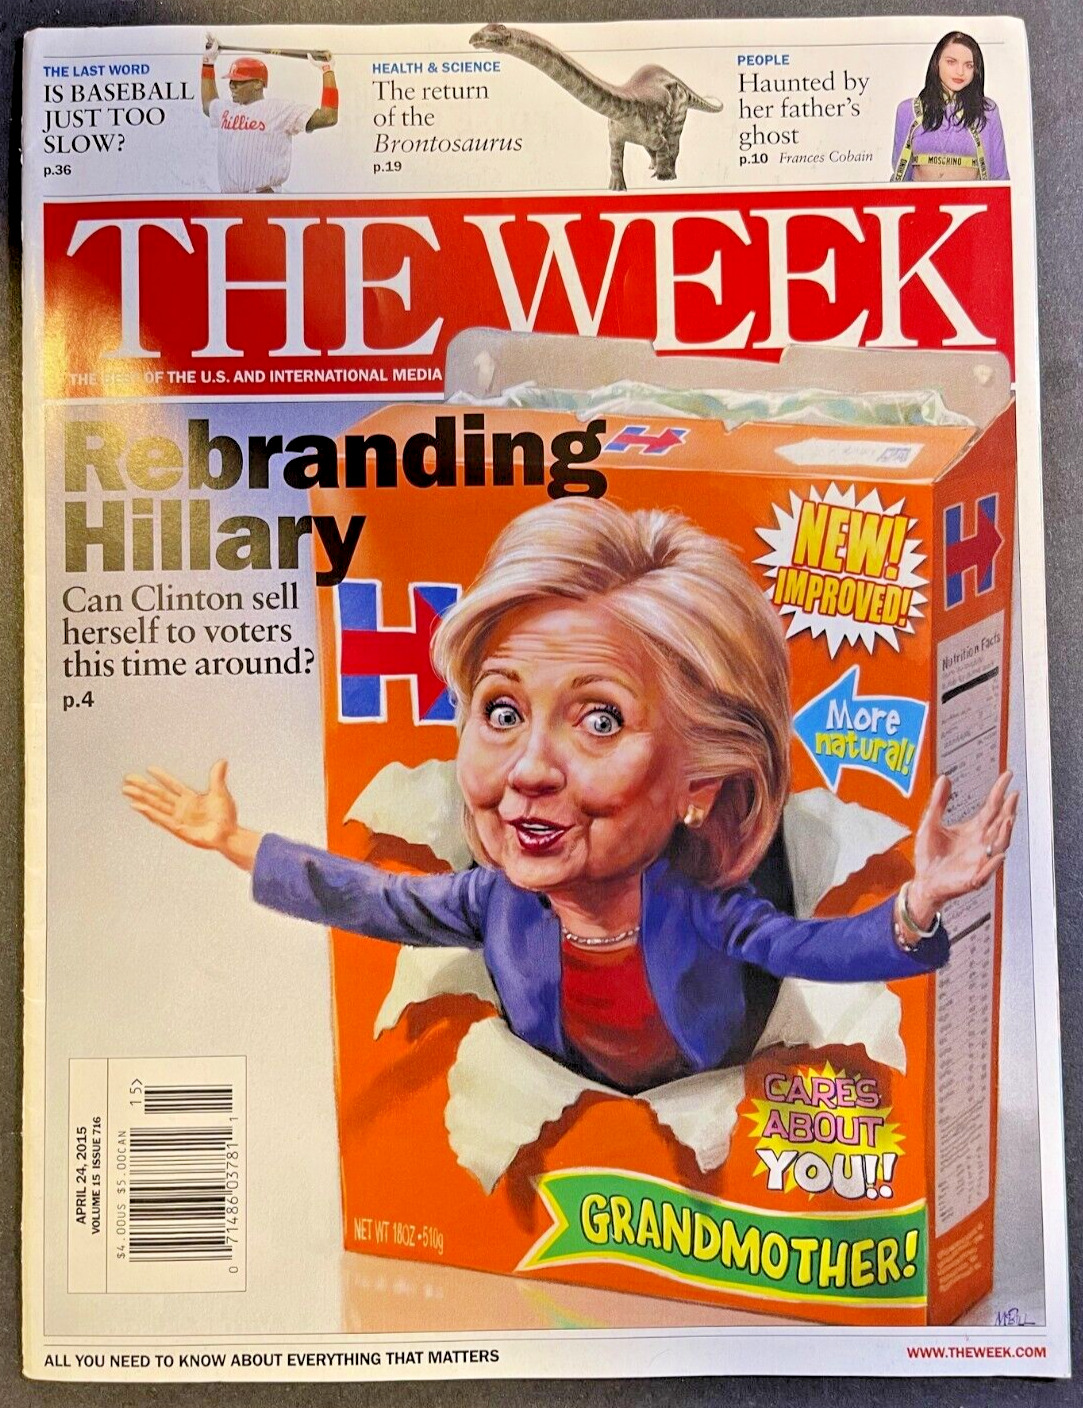 The Week Magazine April 24, 2015 Rebranding Hillary Clinton Neat Cartoon Image